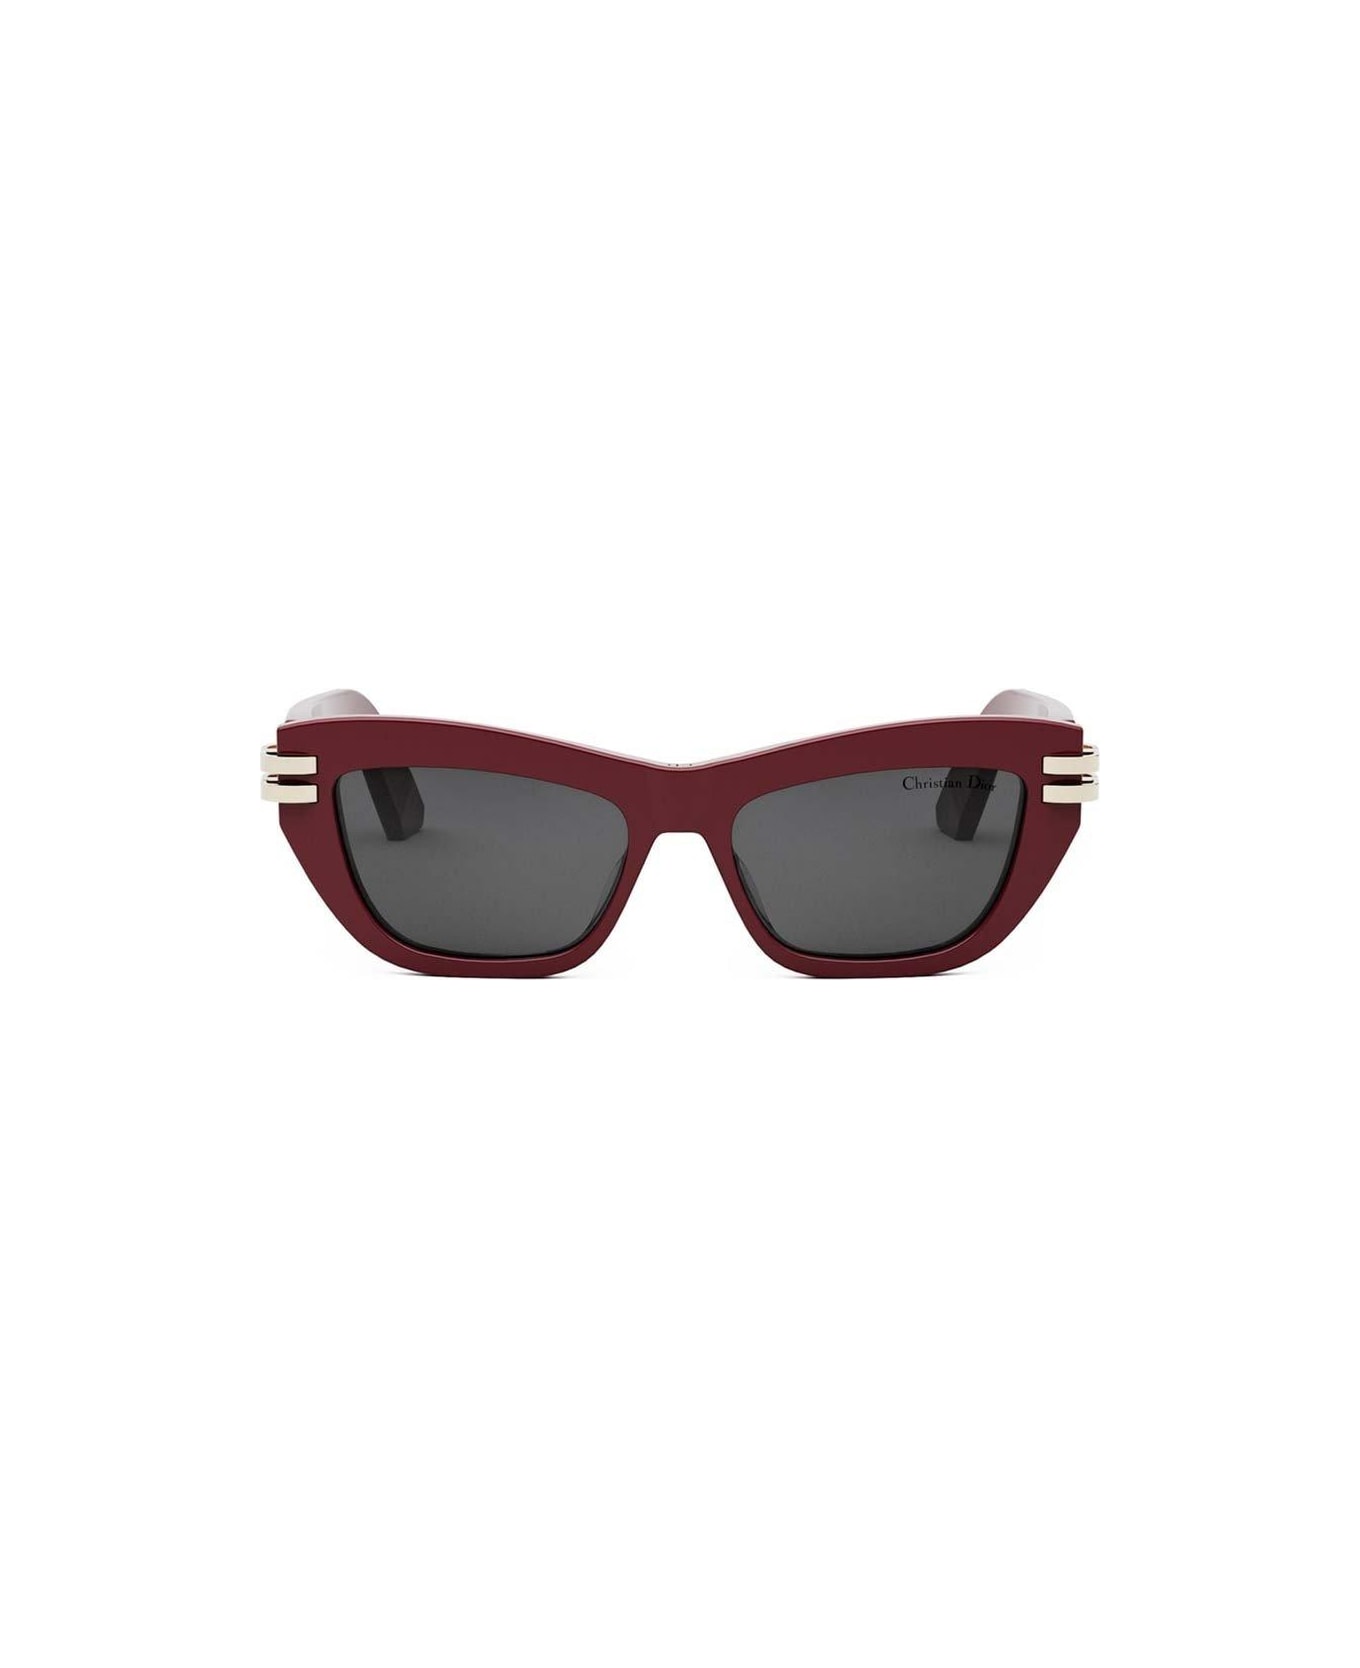 Dior Eyewear Butterfly Frame Sunglasses - 35a0